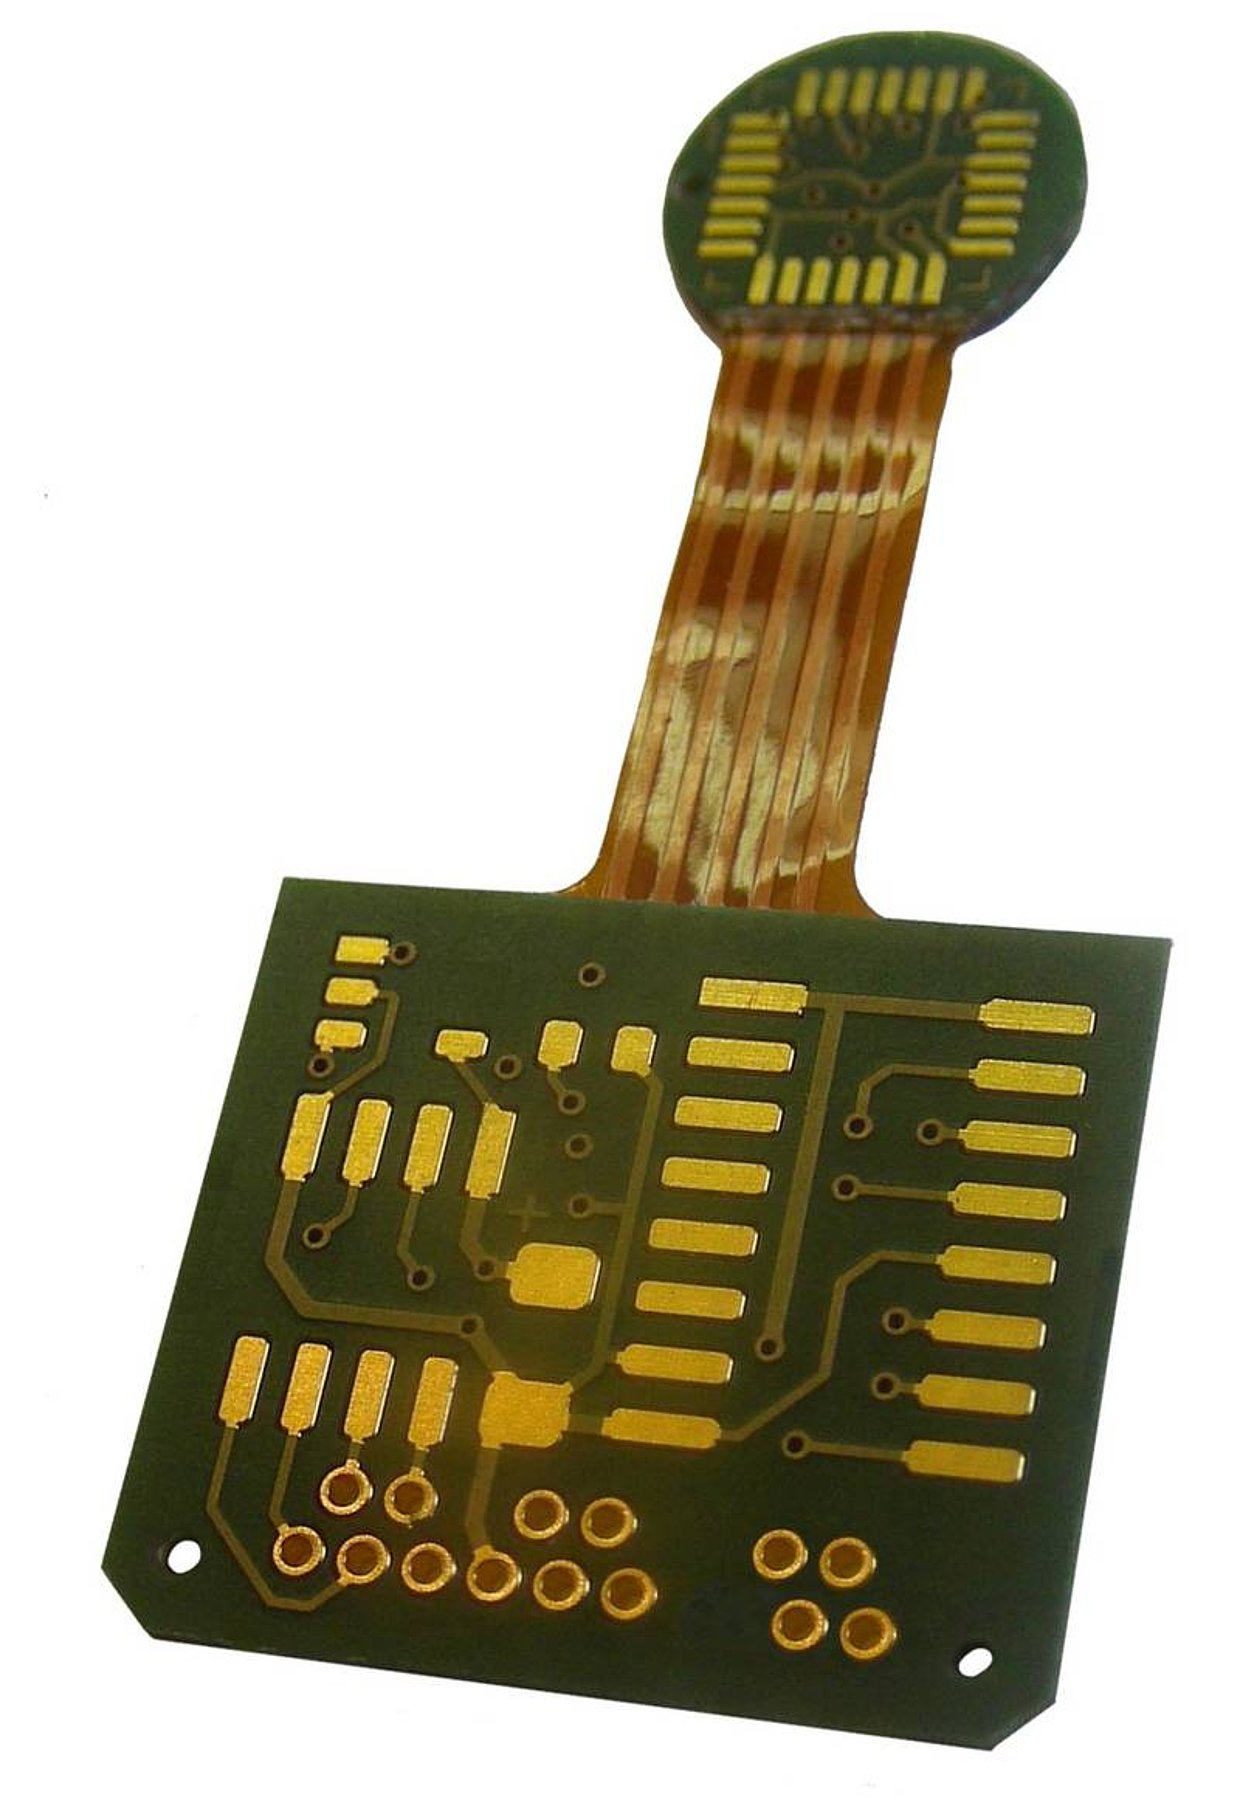 Rigid-Flex circuit board